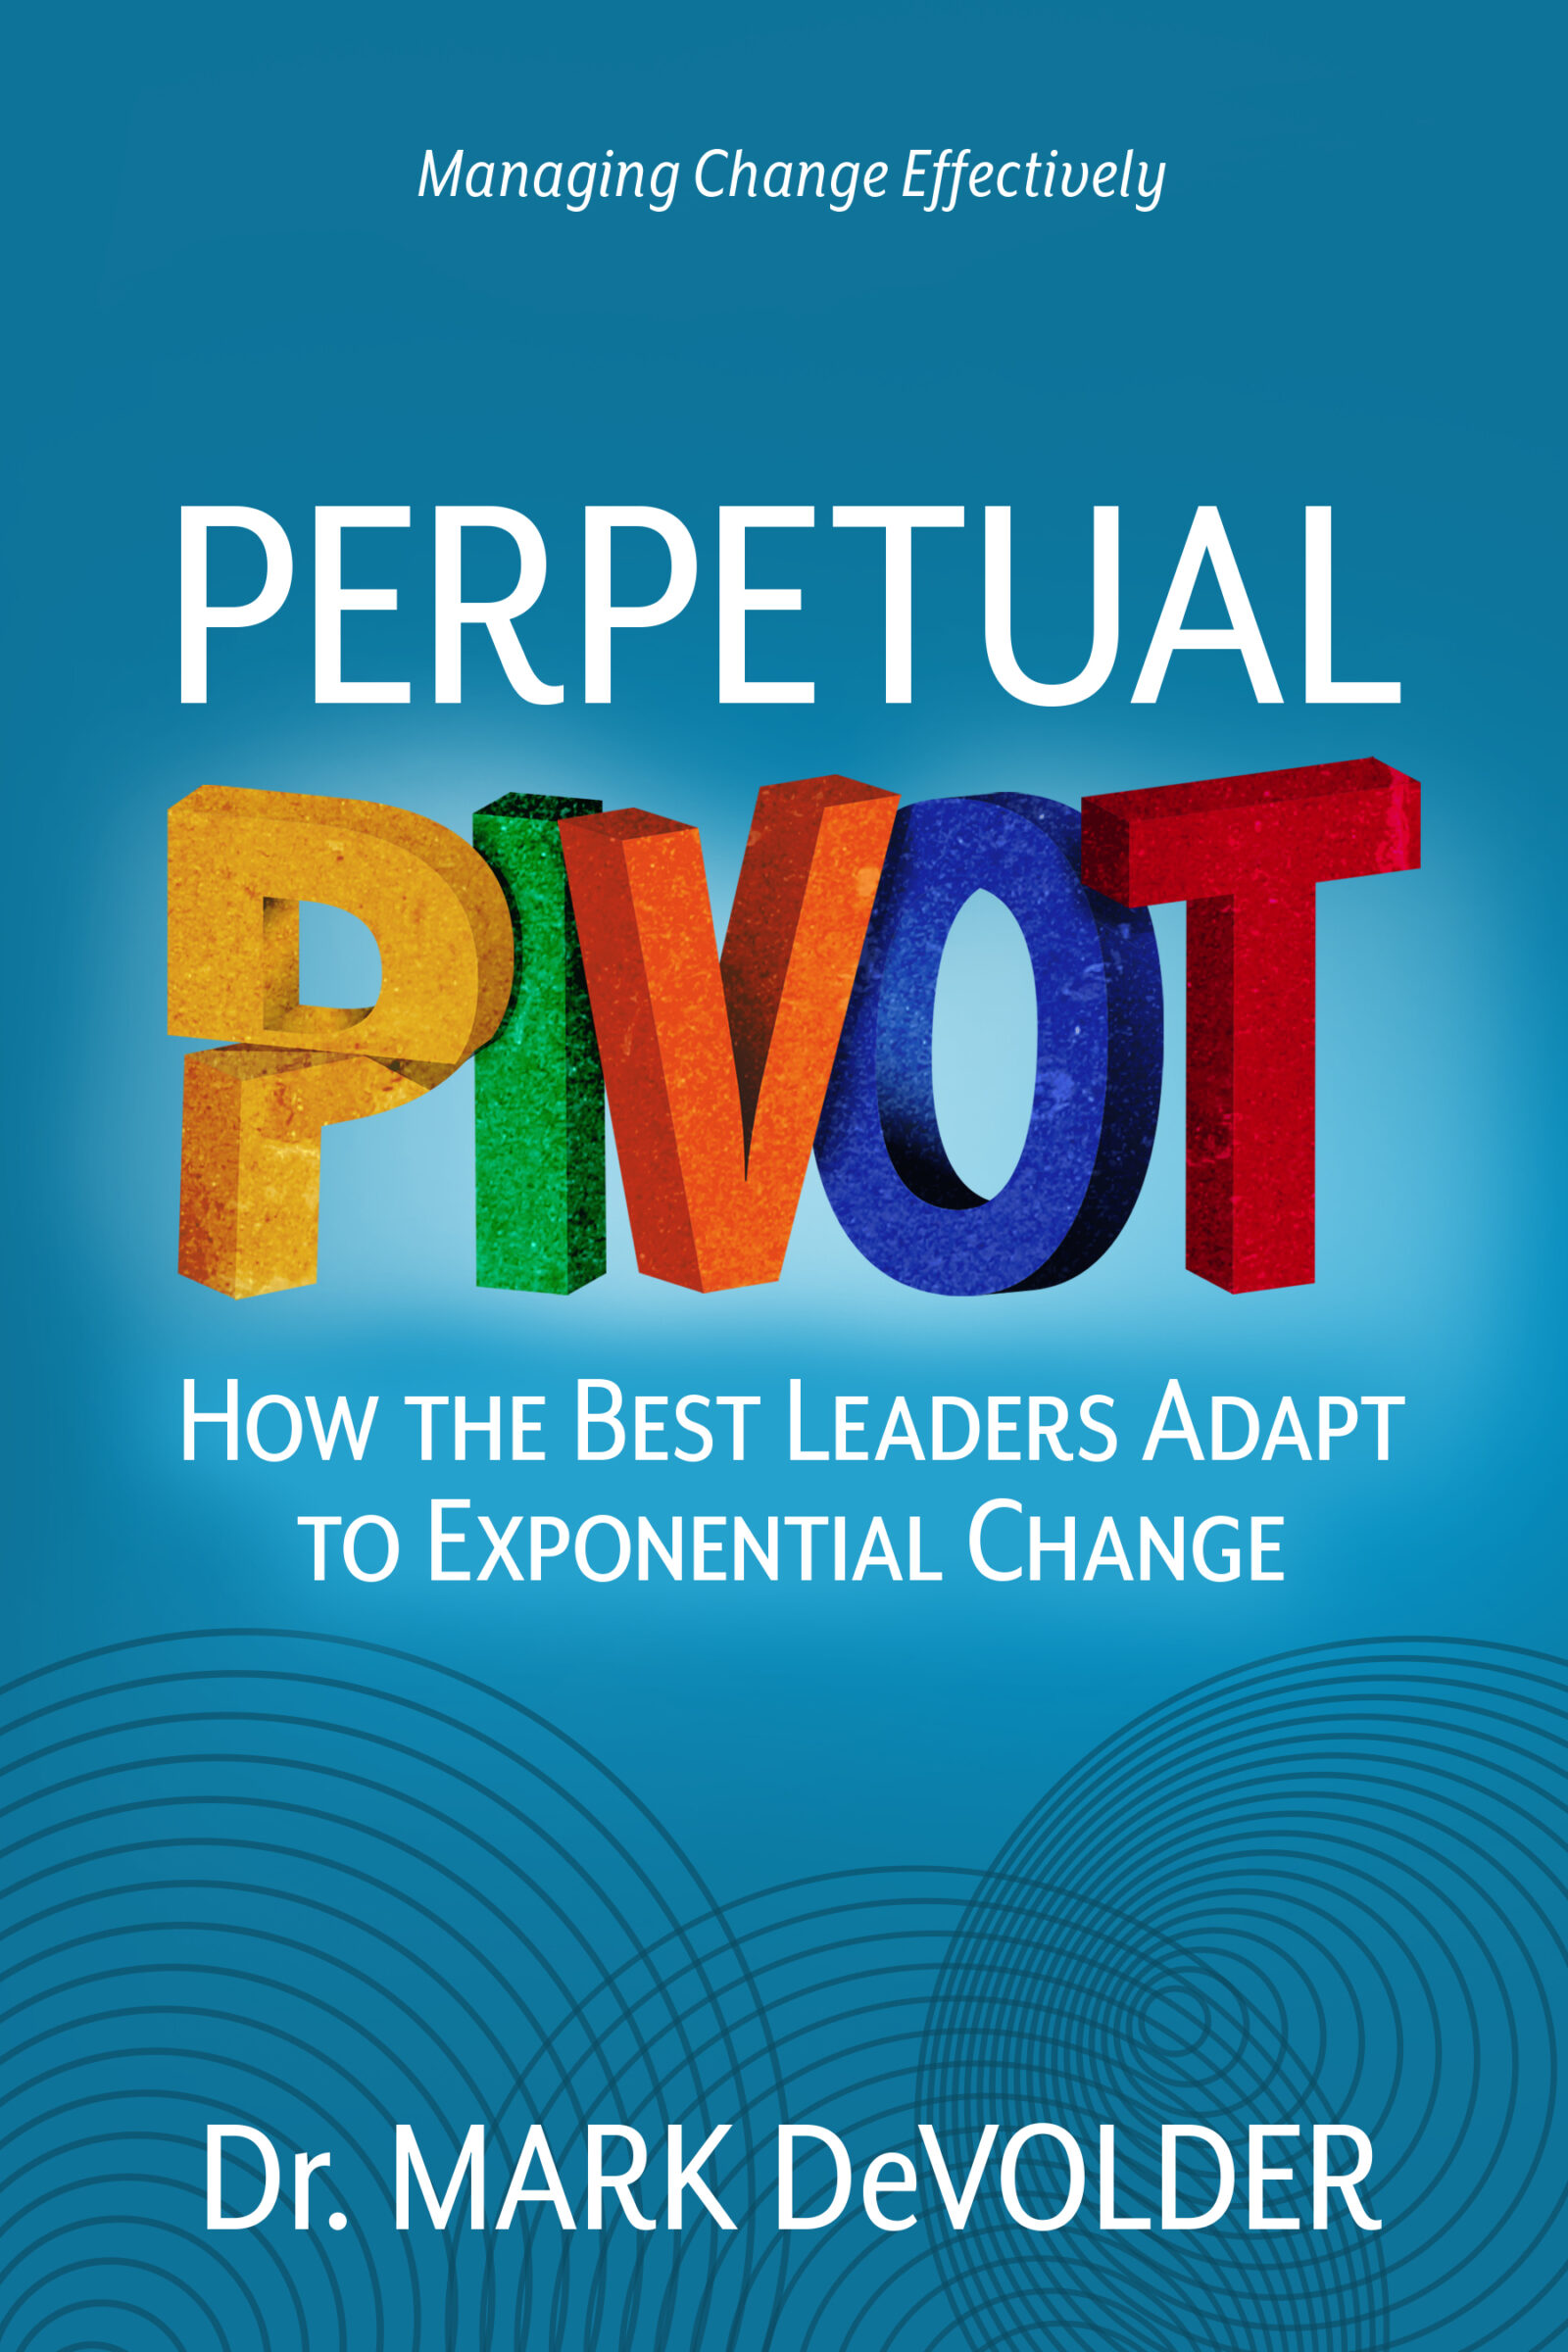 Perpetual Pivot Book Cover